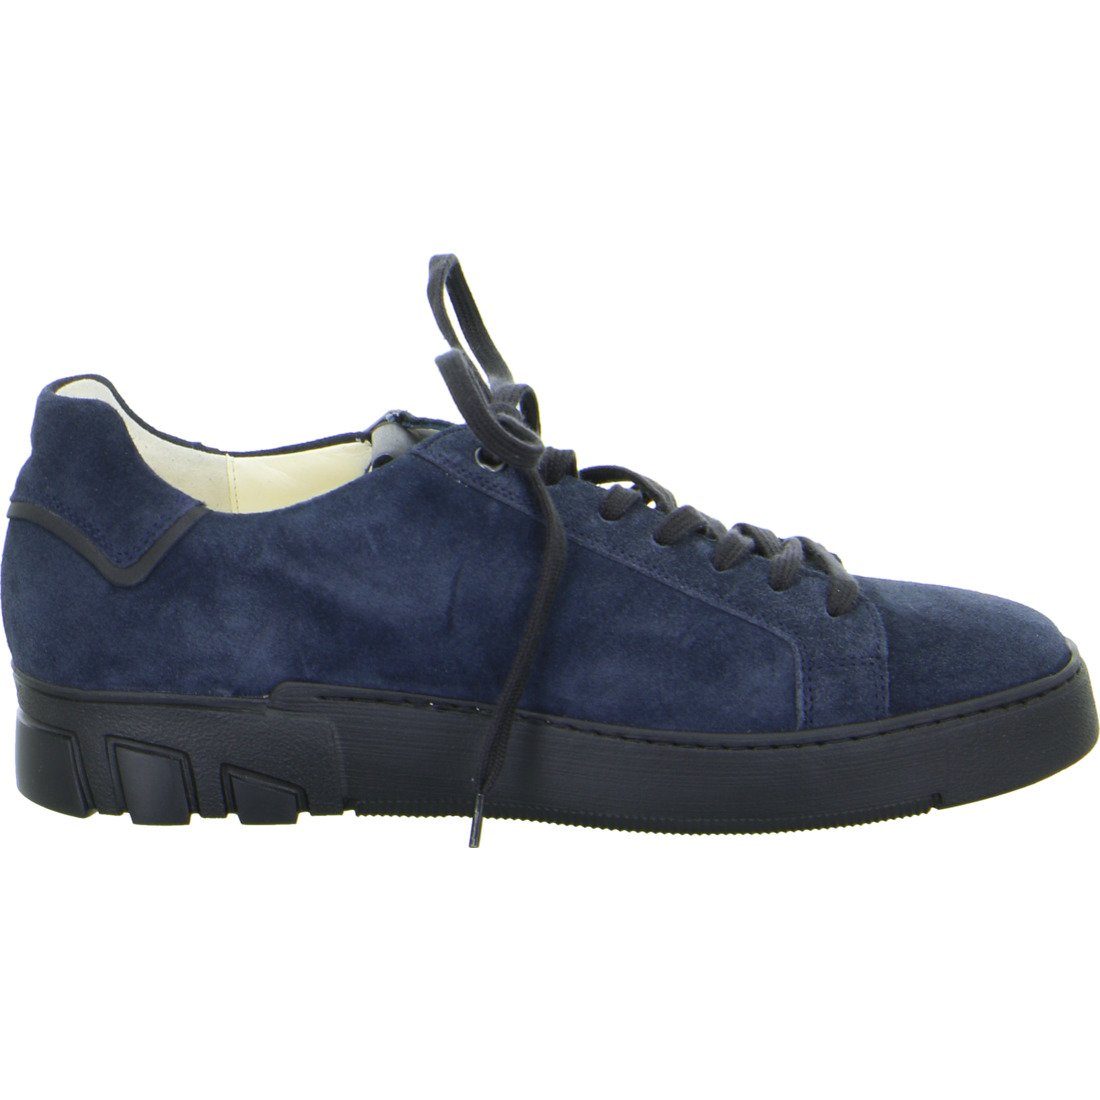 Ganter Ganter - Velours 050285 Sneaker Schuhe, Sneaker blau Giulietta